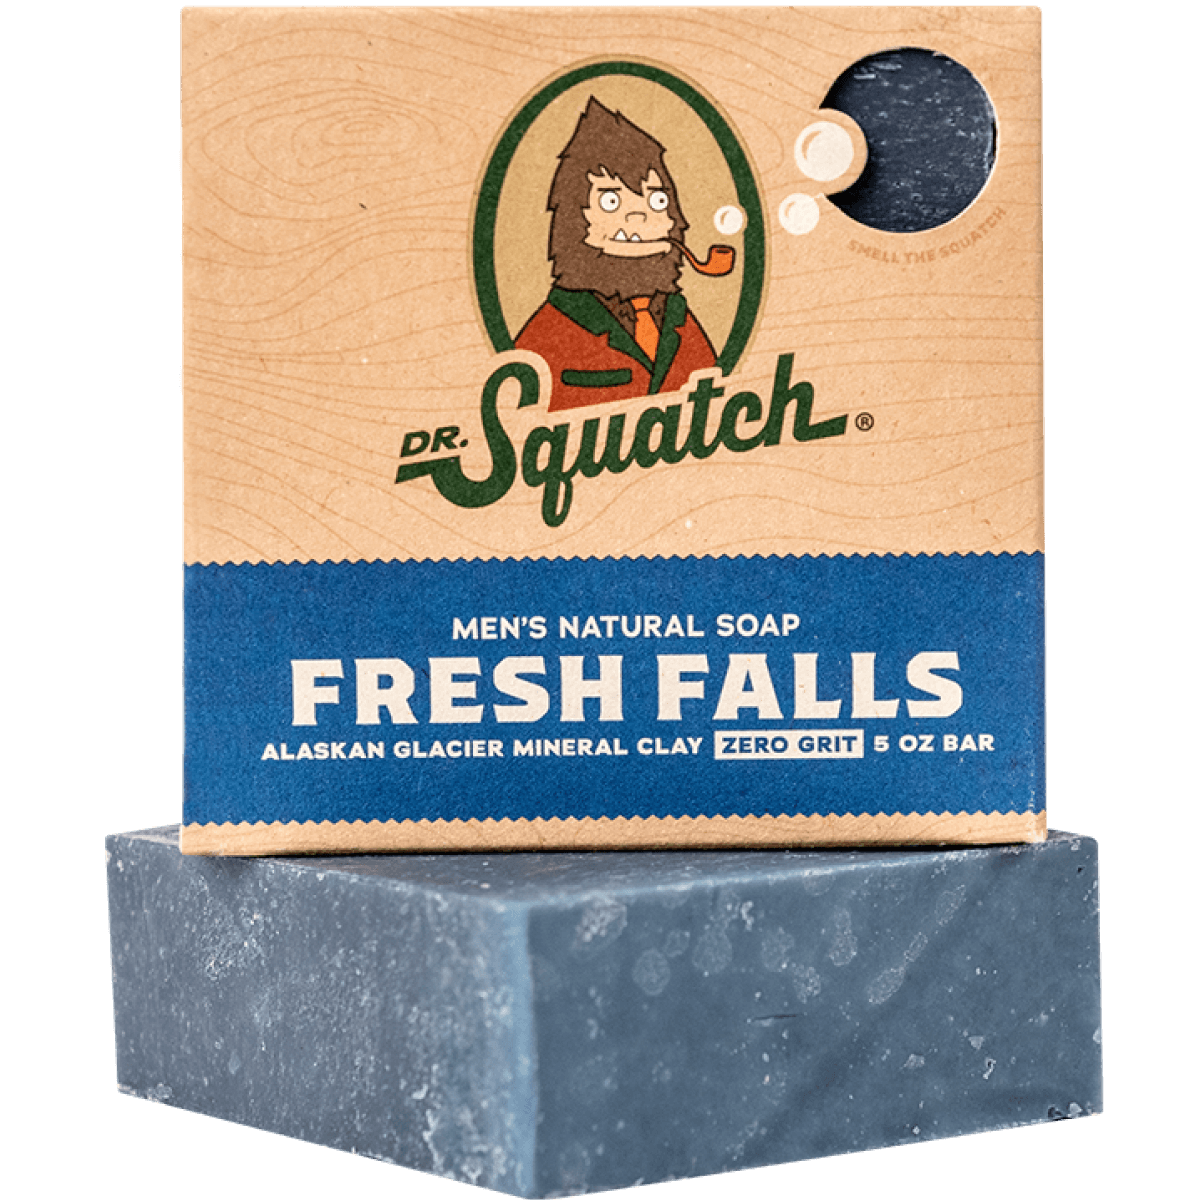 Dr. Squatch - 💦 RESTOCKED 💦 Fresh falls is finally back! Get